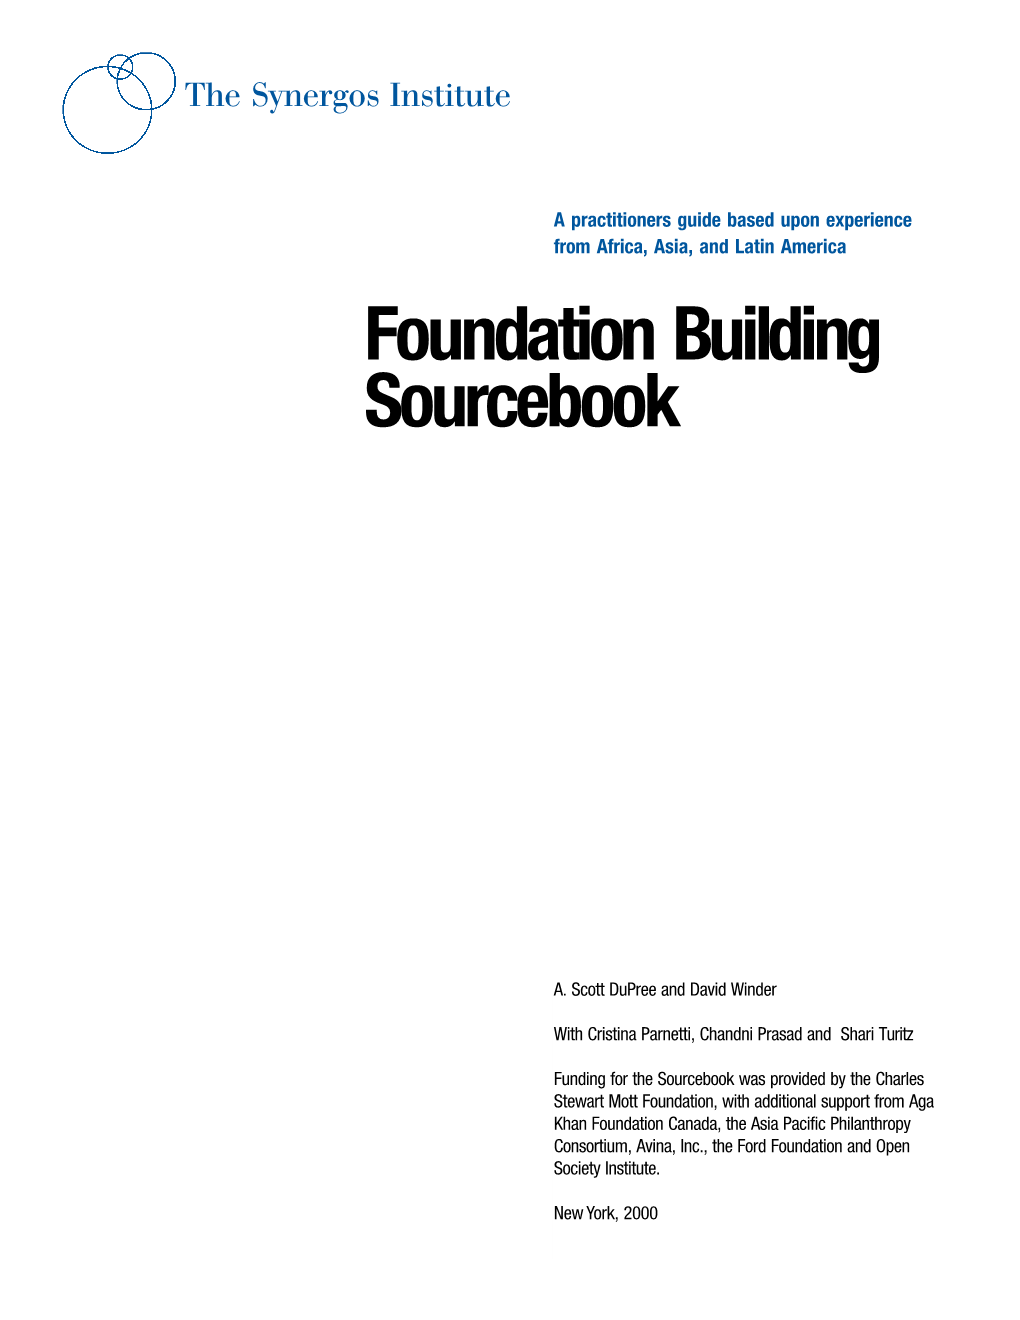 Foundation Building Sourcebook